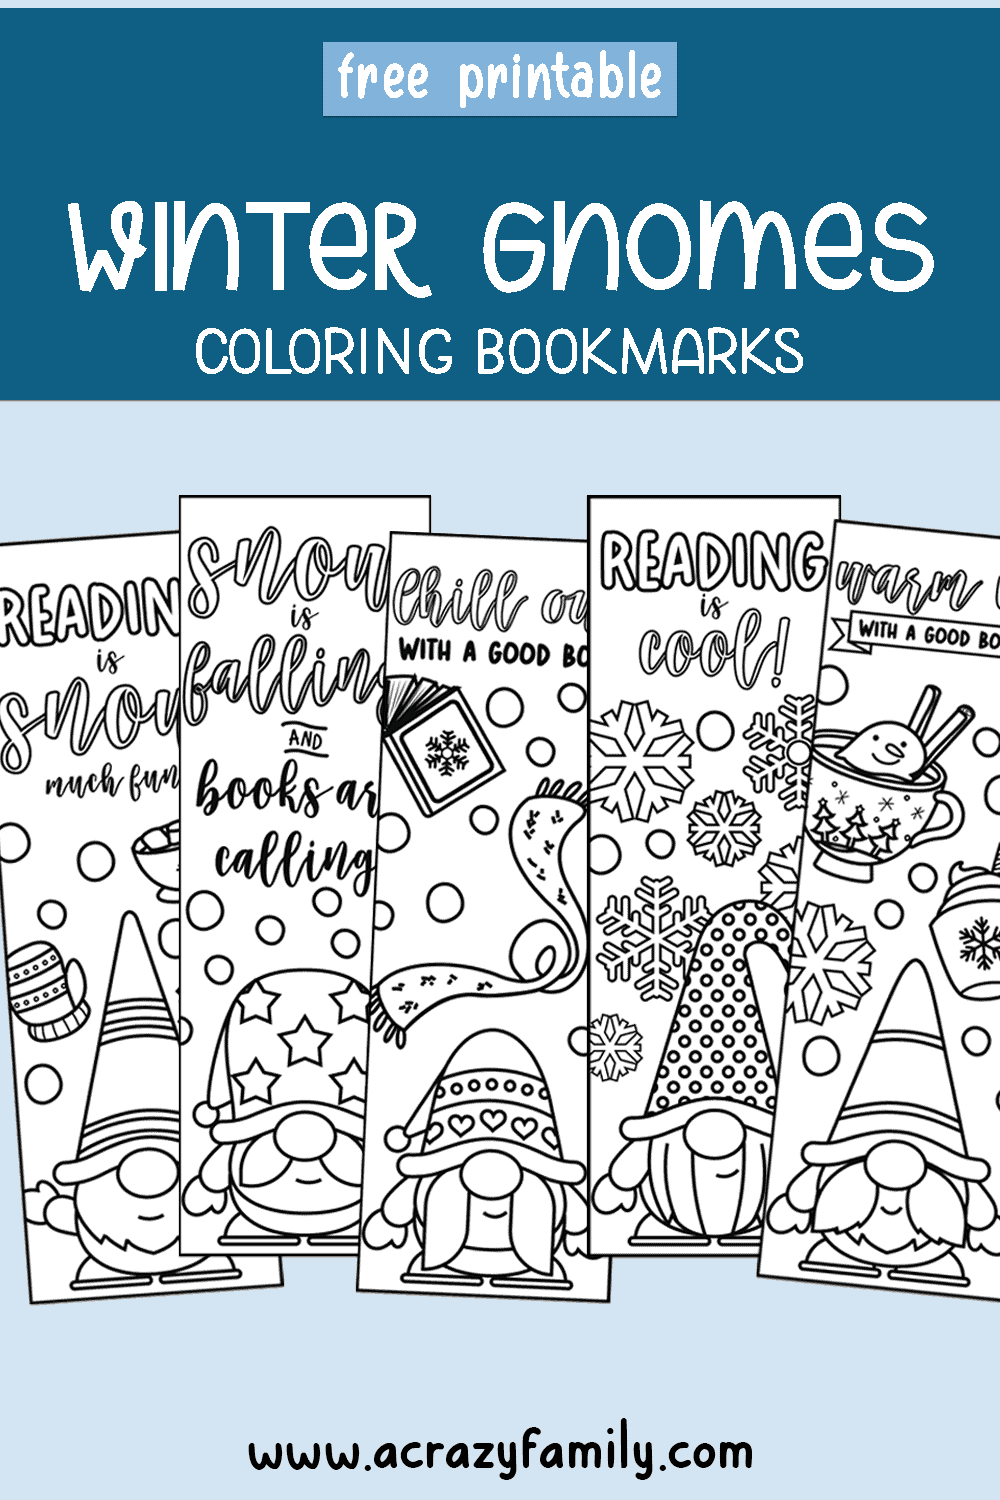 Winter Gnomes Bookmarks 1